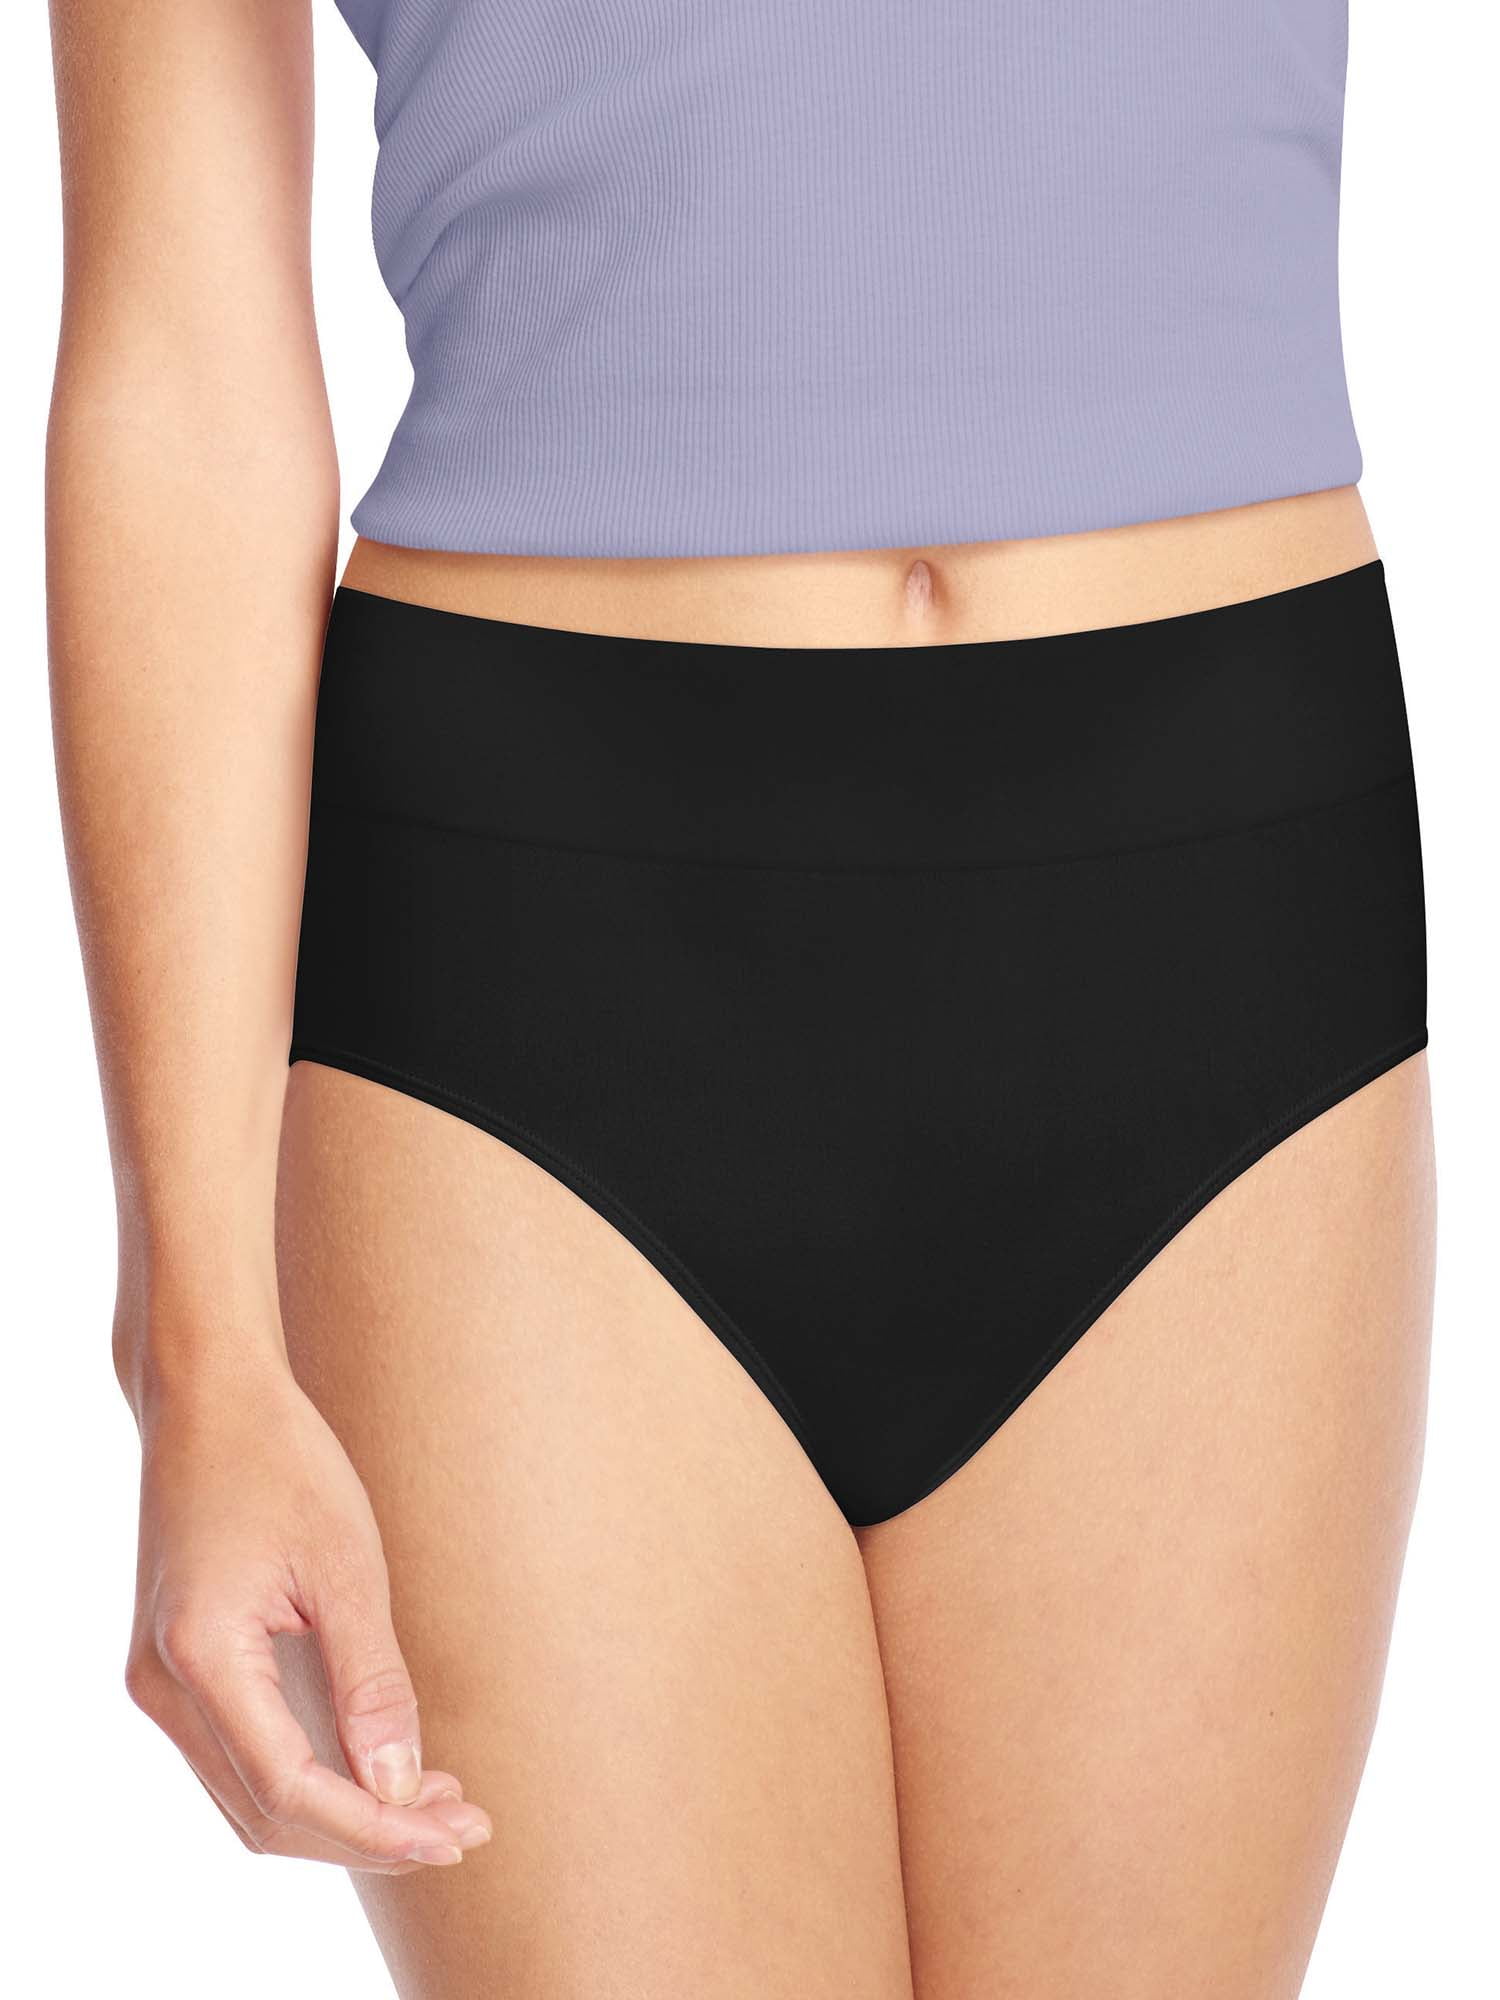 6-12 Women's BIKINI CHEEKY HI-CUT Panties Undies 95% COTTON GIFT PACK 30019 S-XL 